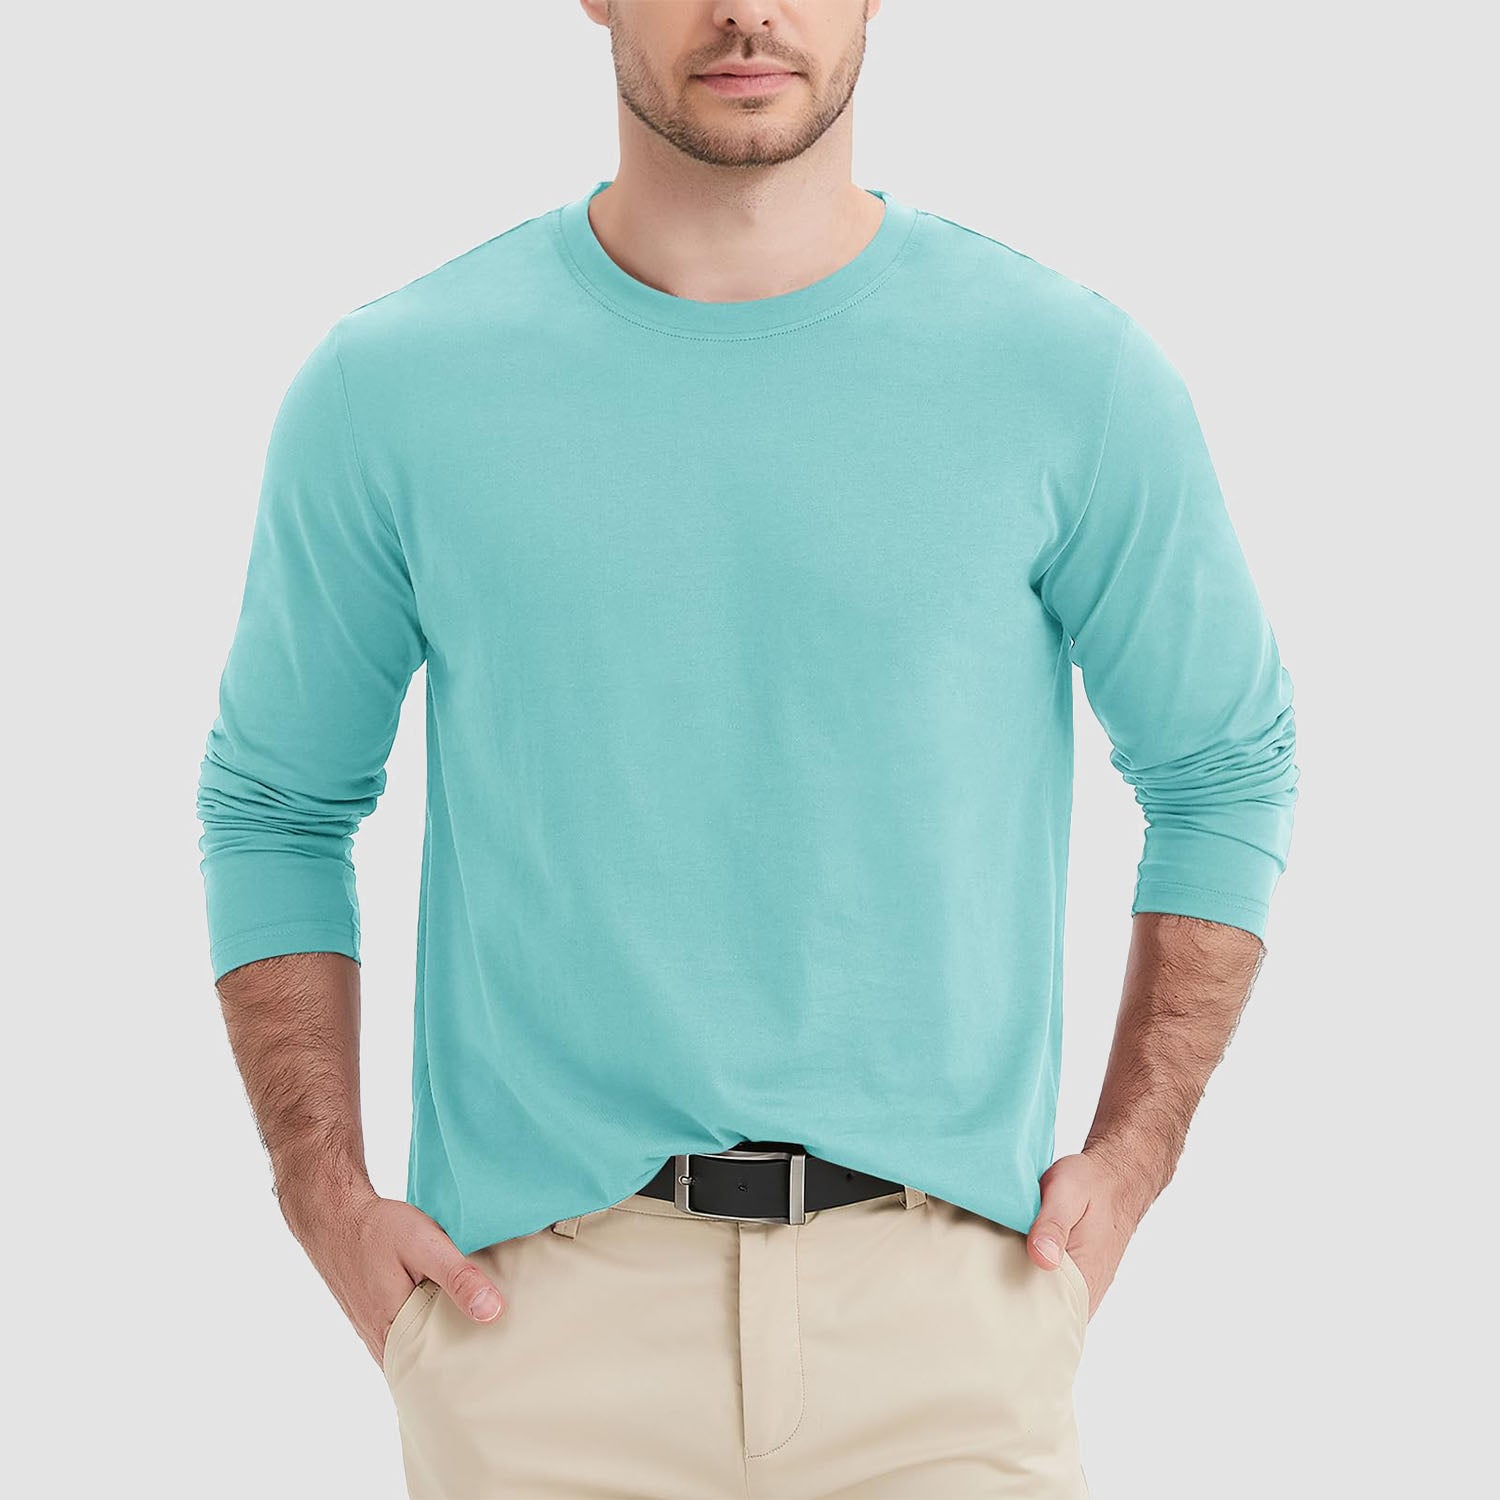 Men's Long Sleeve Shirts Cotton Crew Neck T Shirt Solid Casual Shirt Lightweight Work Tee Shirts